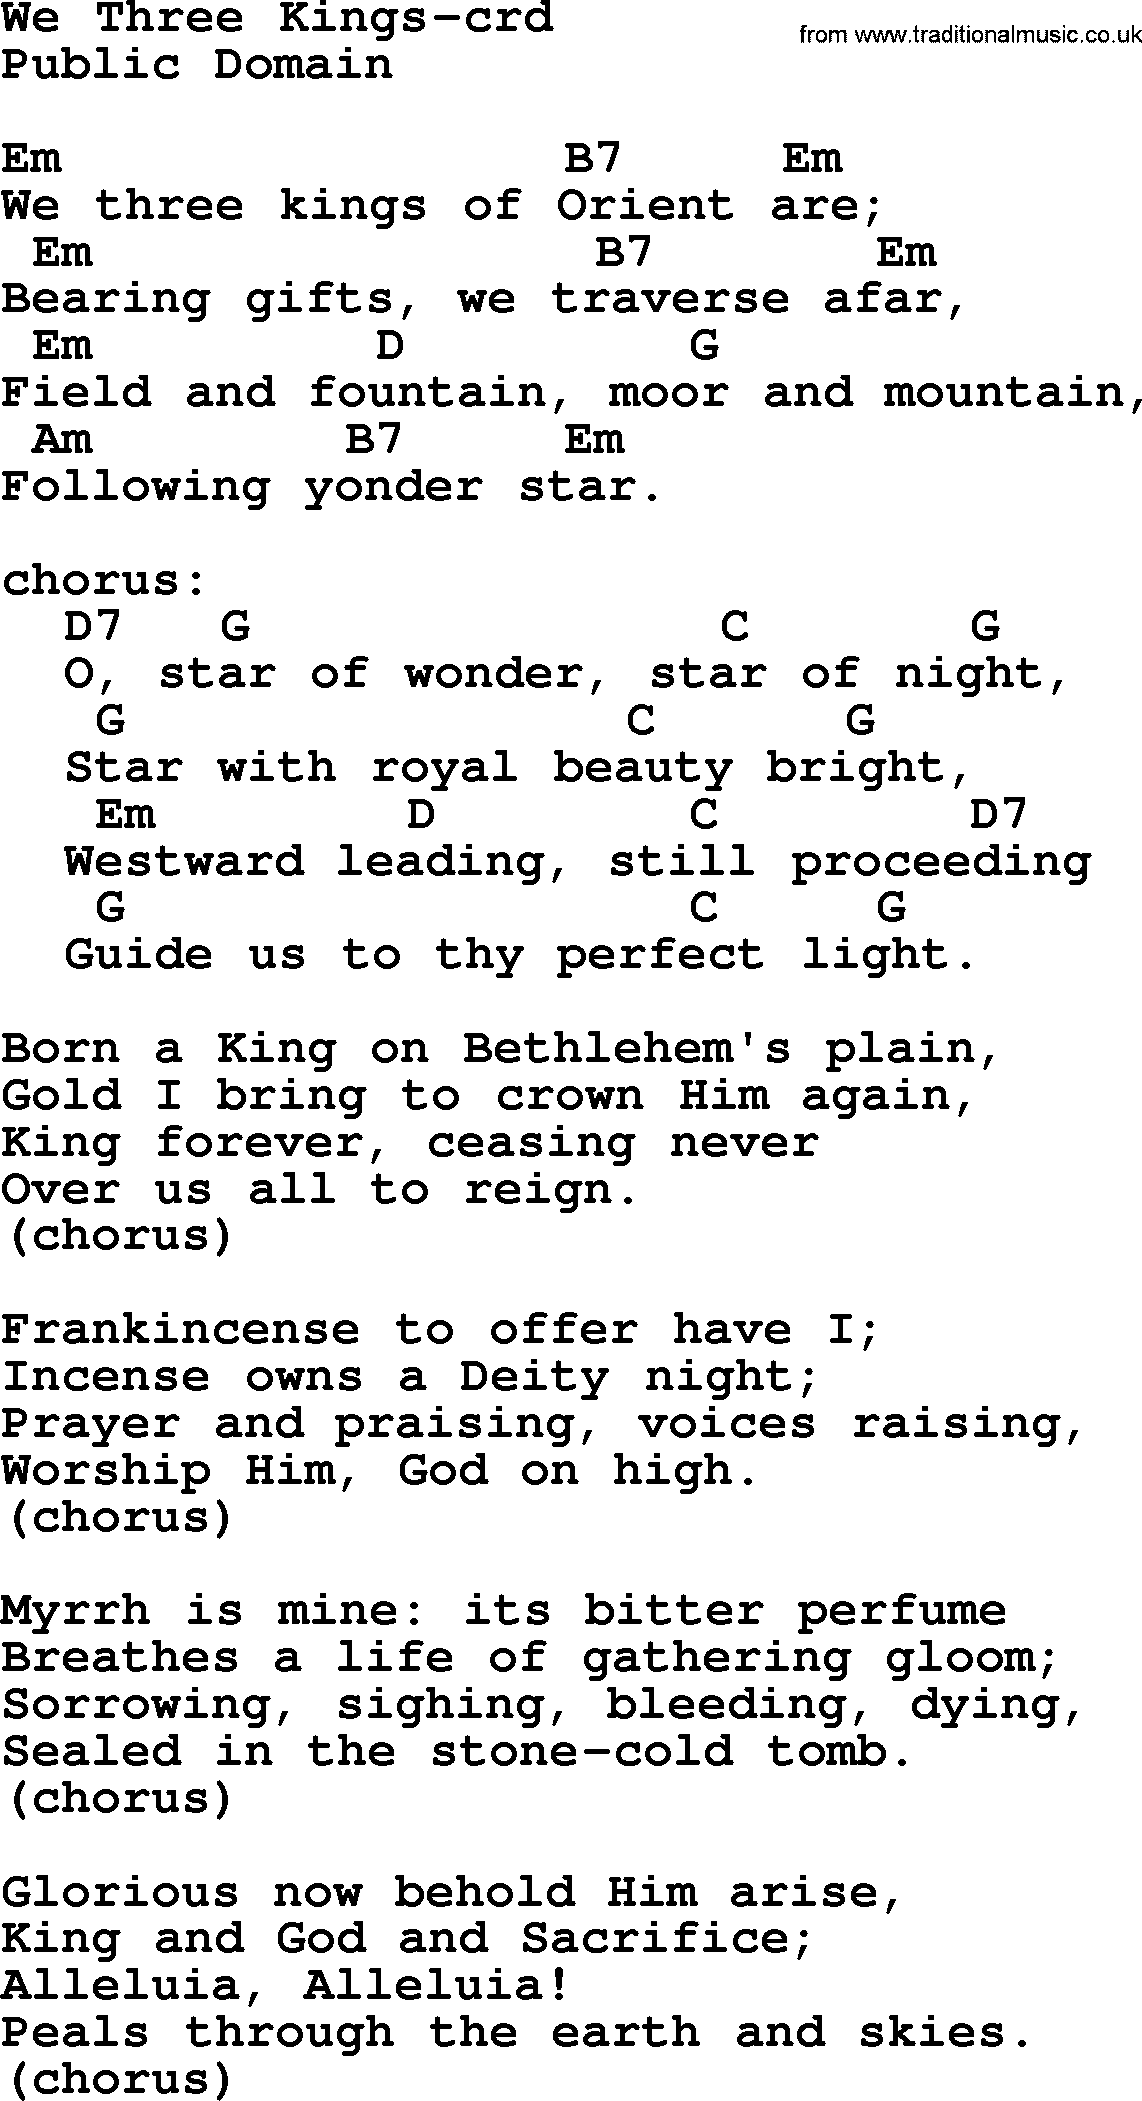 Top 500 Hymn We Three Kings lyrics, chords and PDF